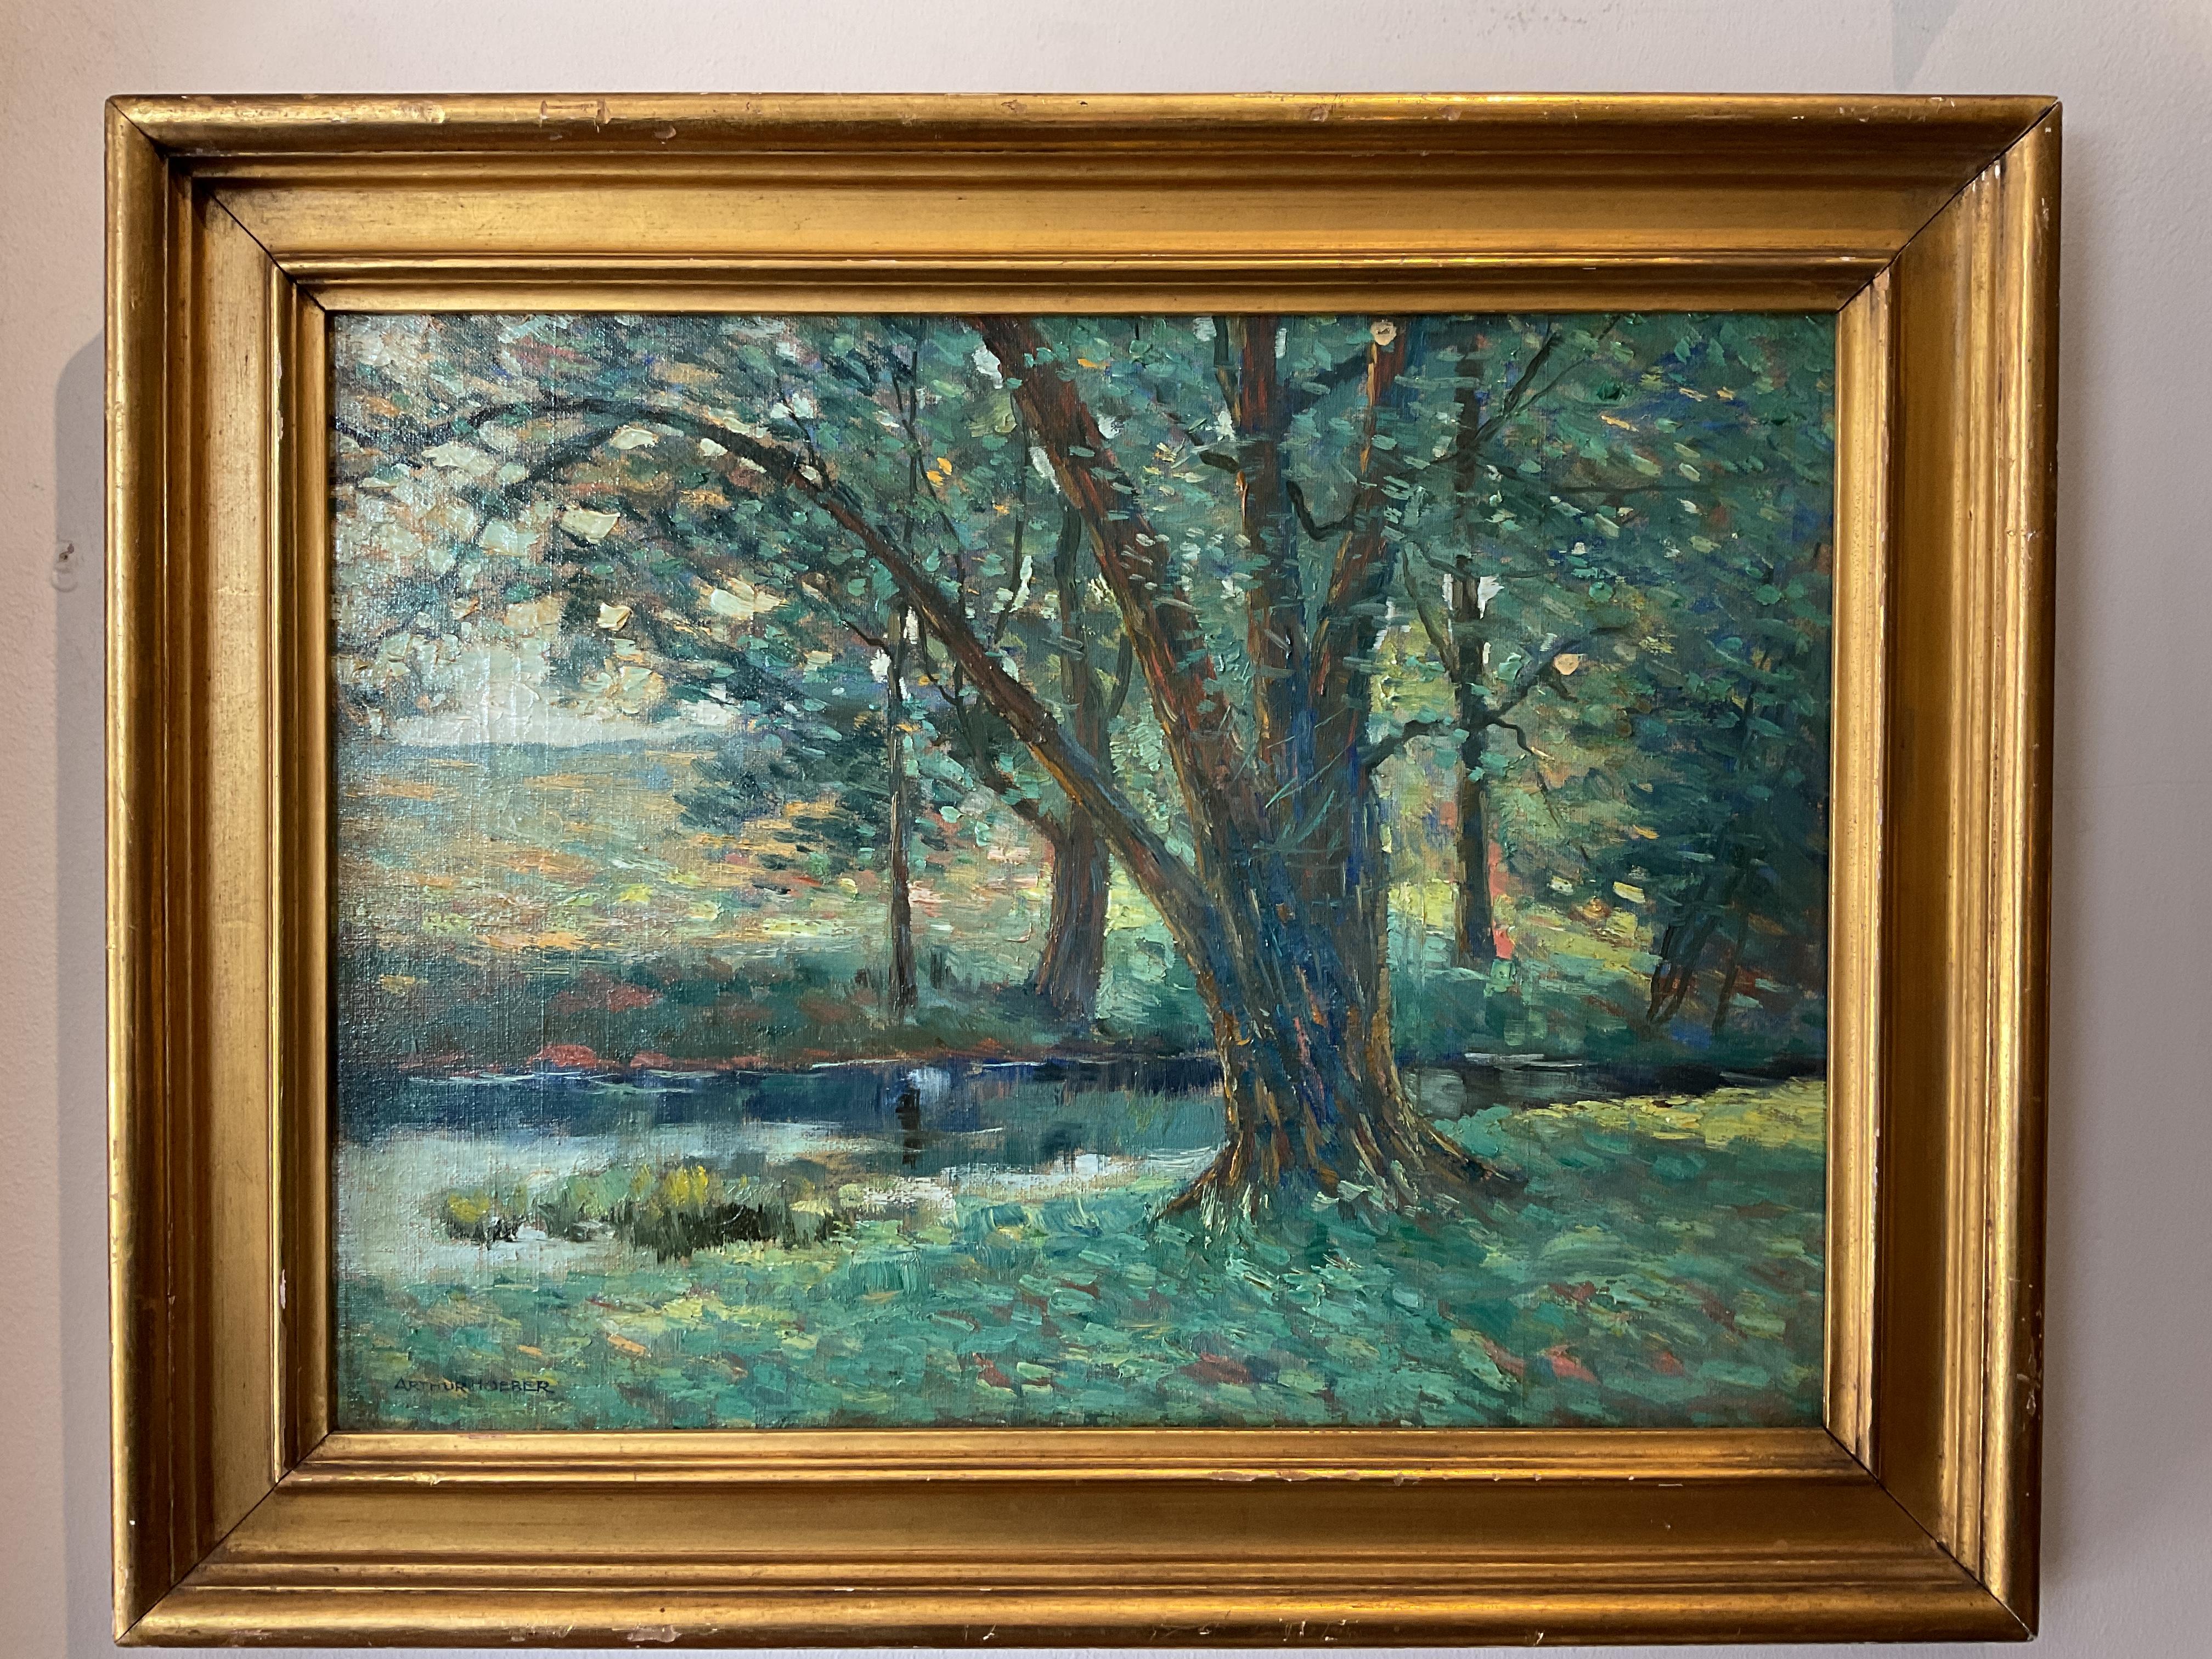 Antique American Impressionist Landscape Painting - “Willow” by Arthur Hoeber